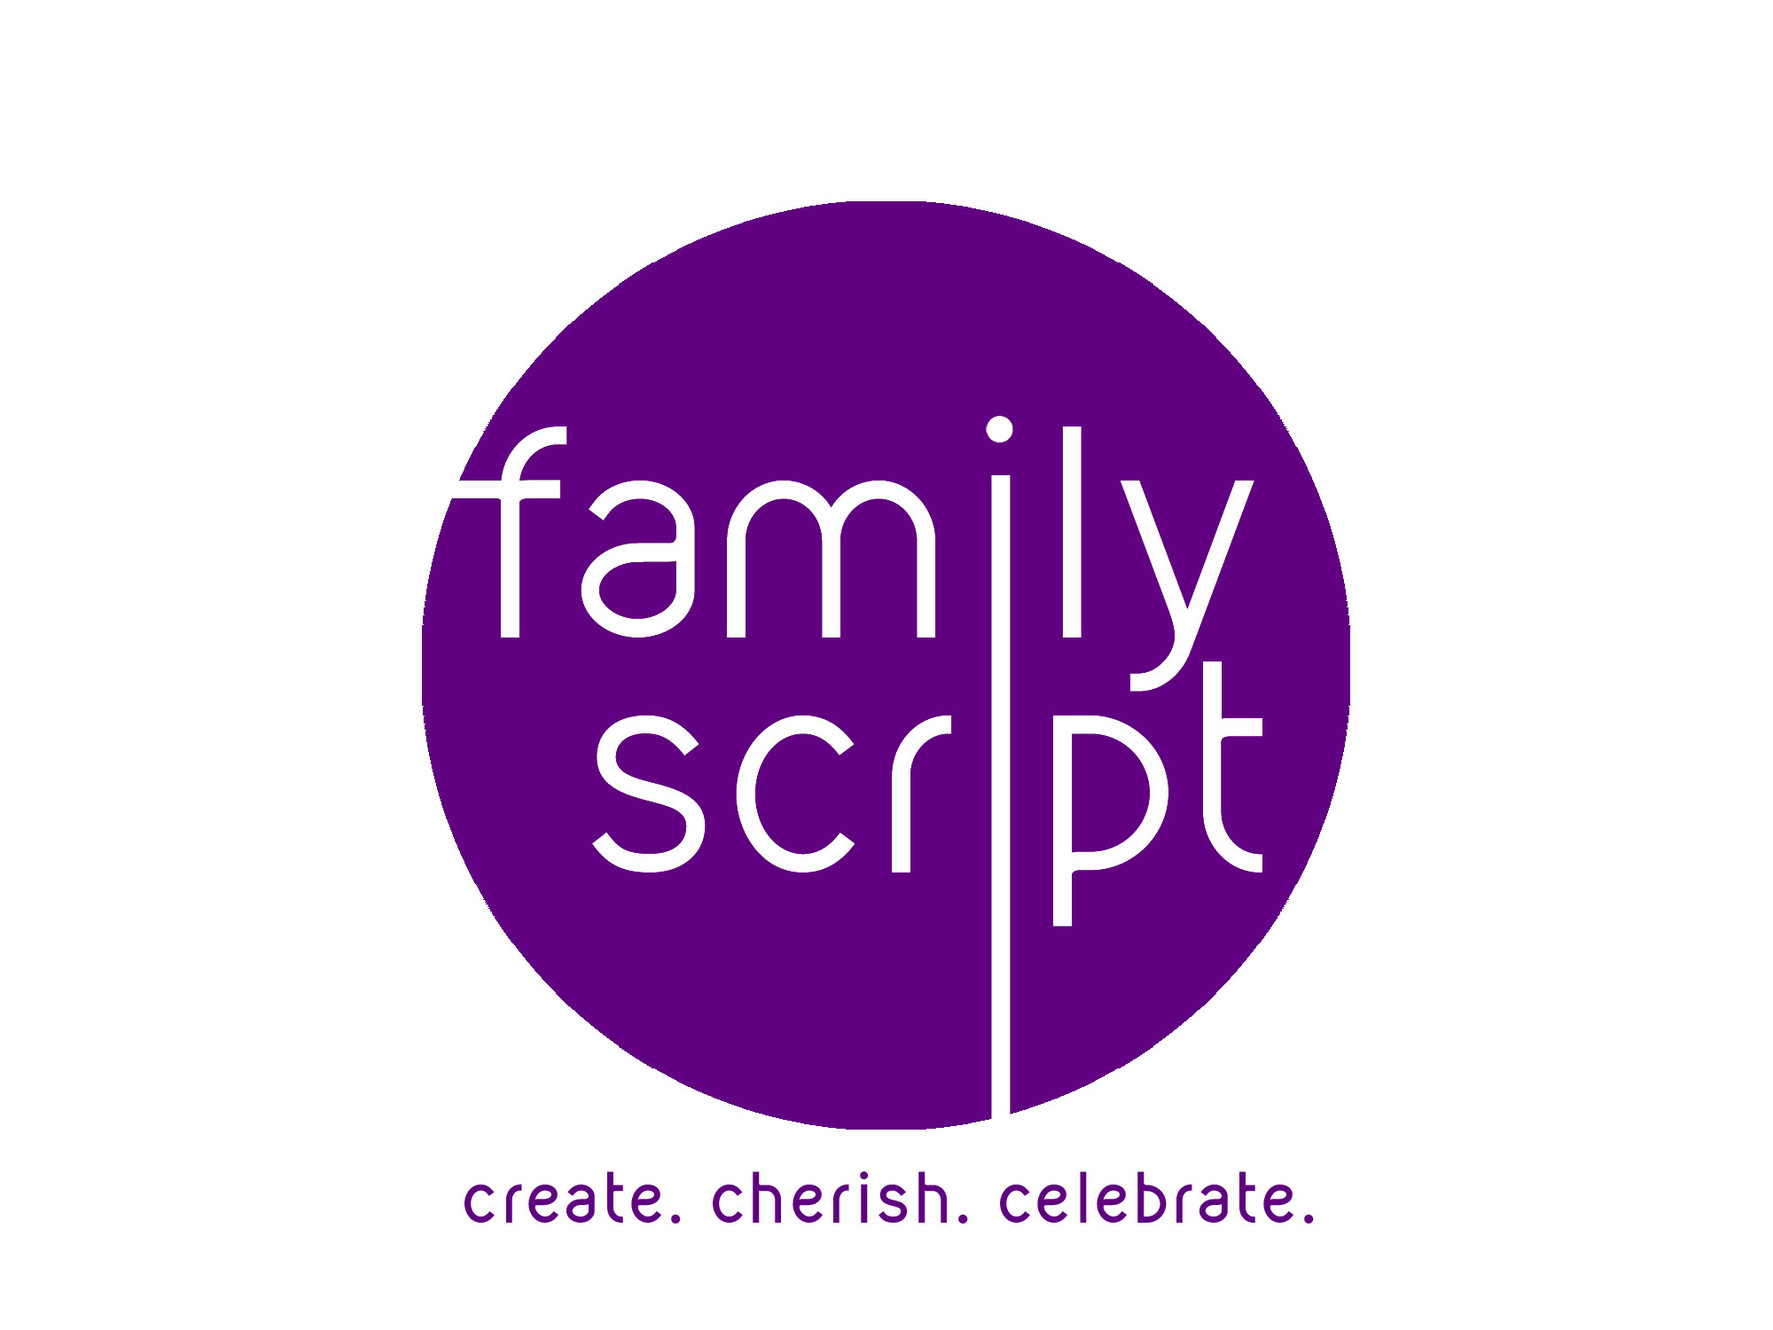 Family Script | Family Book | Cherish Memories in Customised book